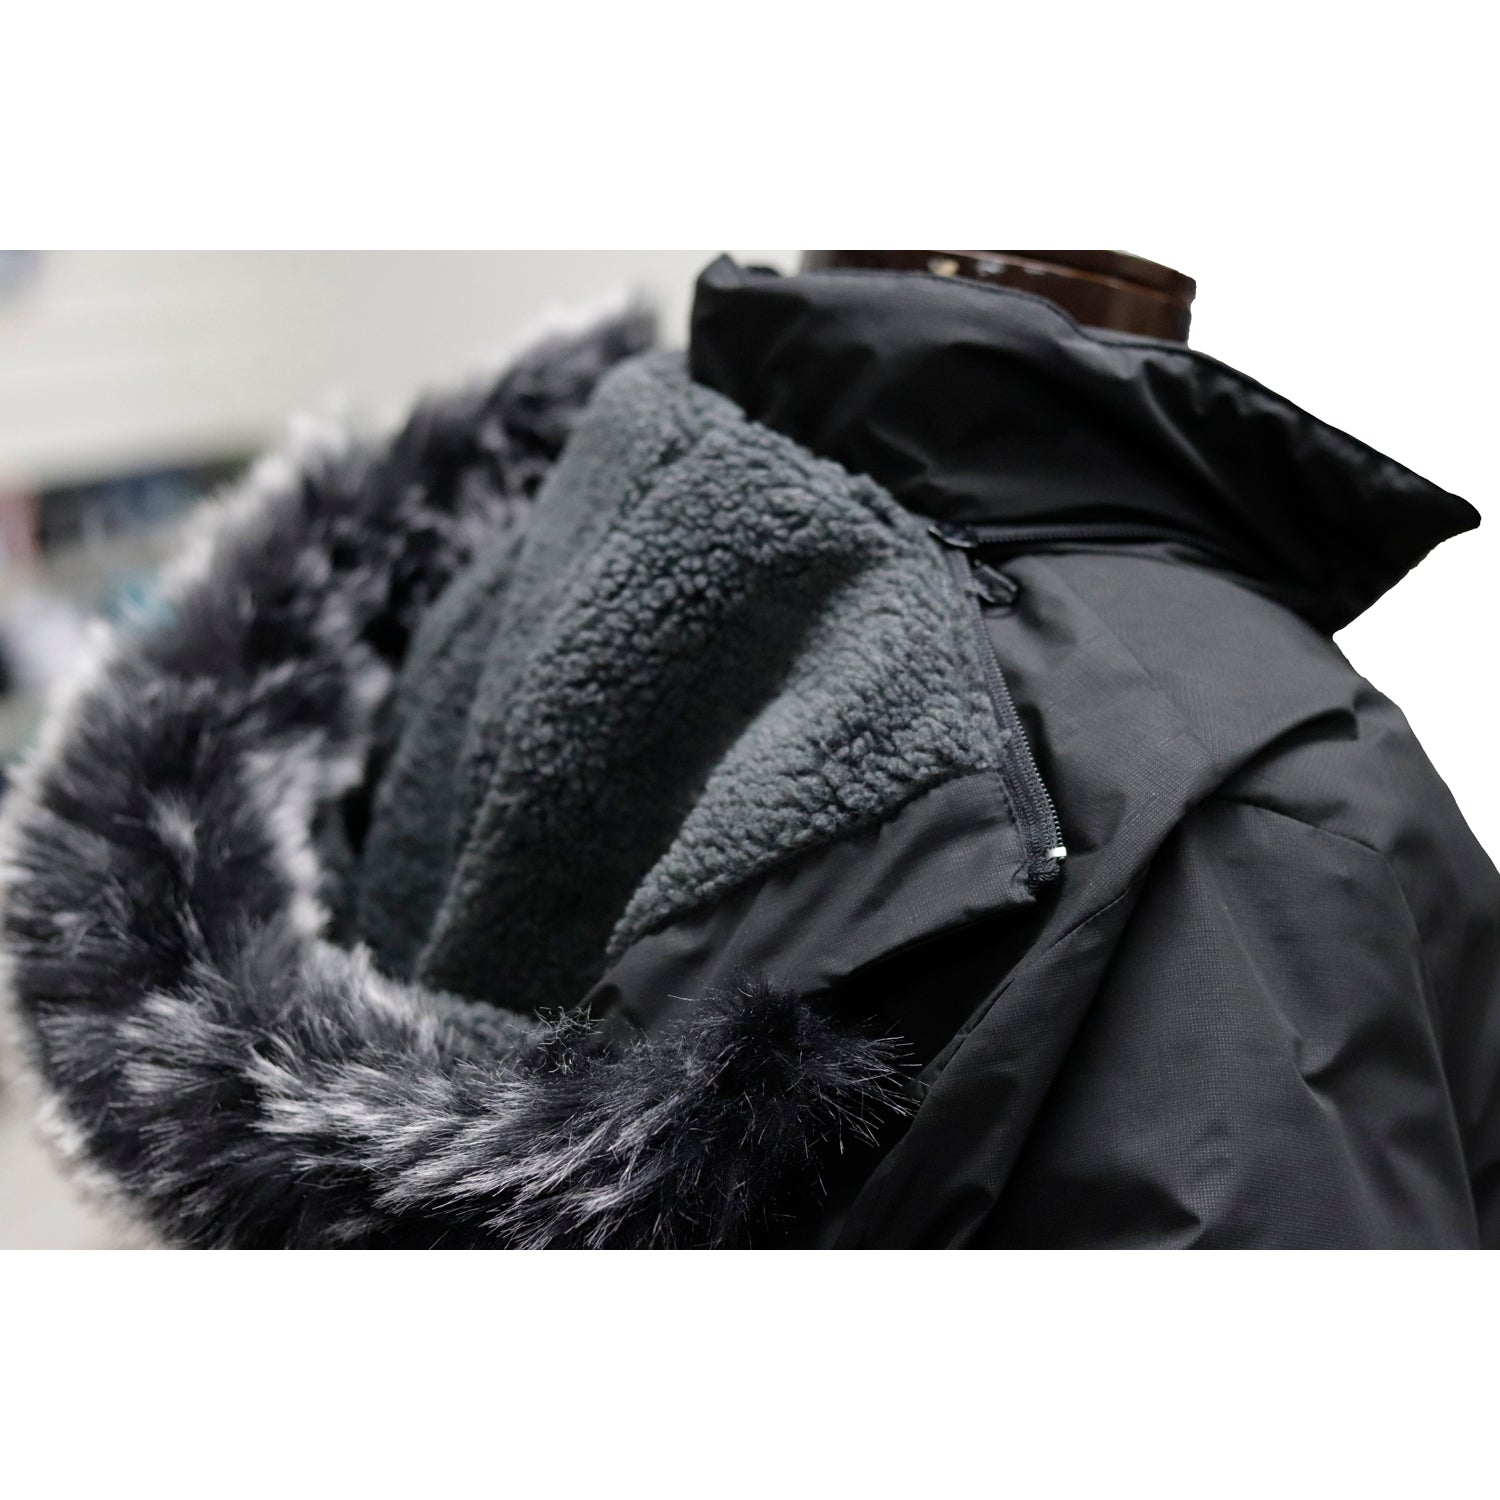 Welsh Mountain Women's Winter Coat Removable Fur-Edged Hood WM1821